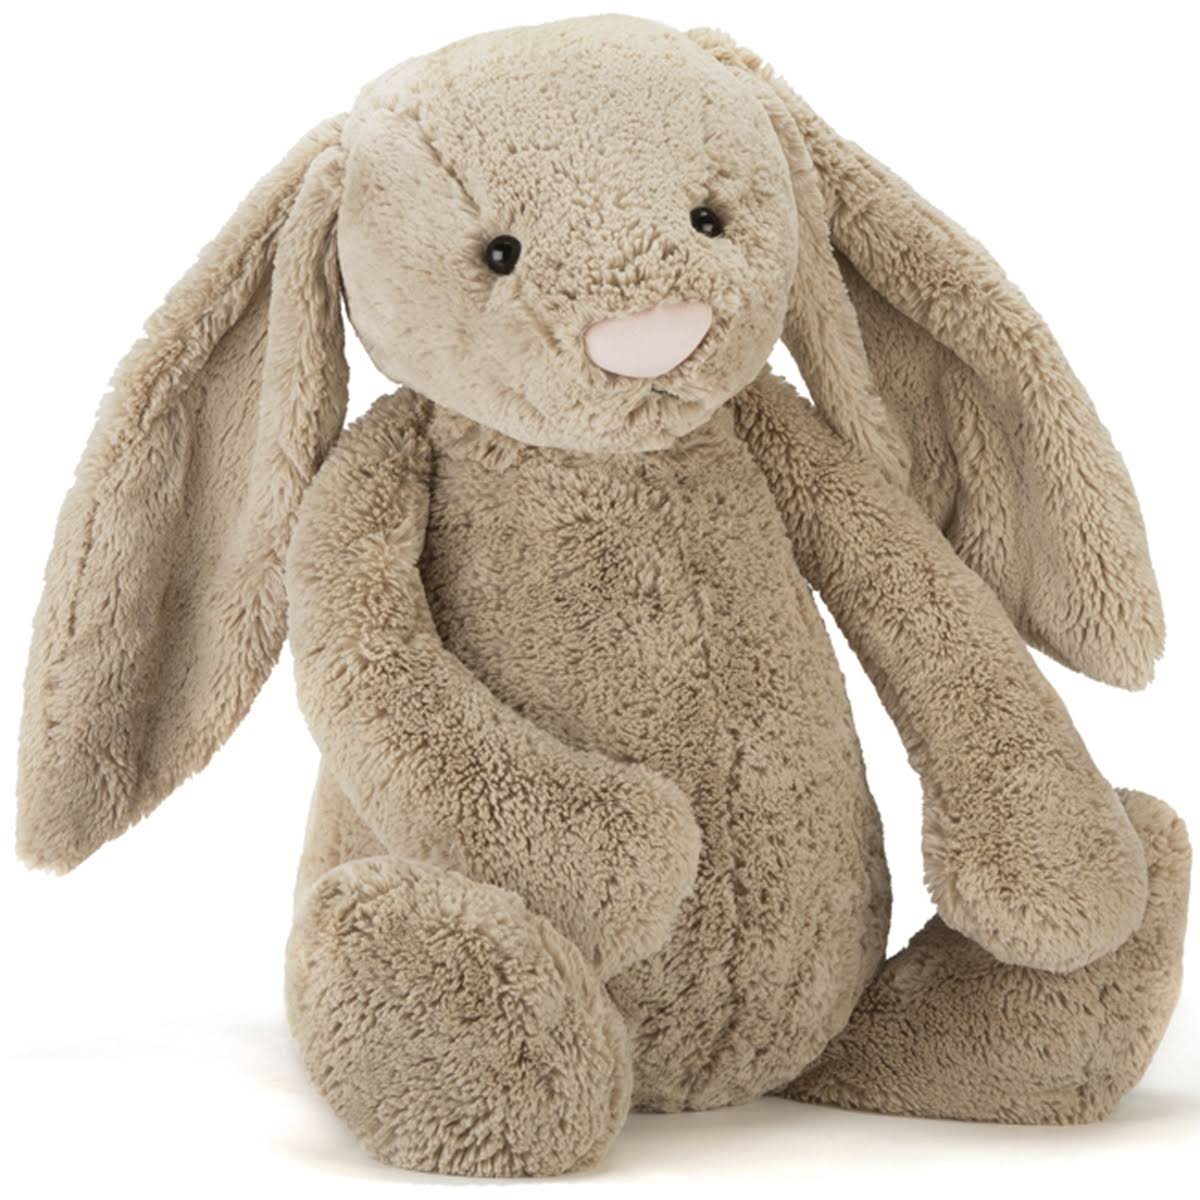 Jellycat Bashful Bunny Plush Toy - Beige, 72cm